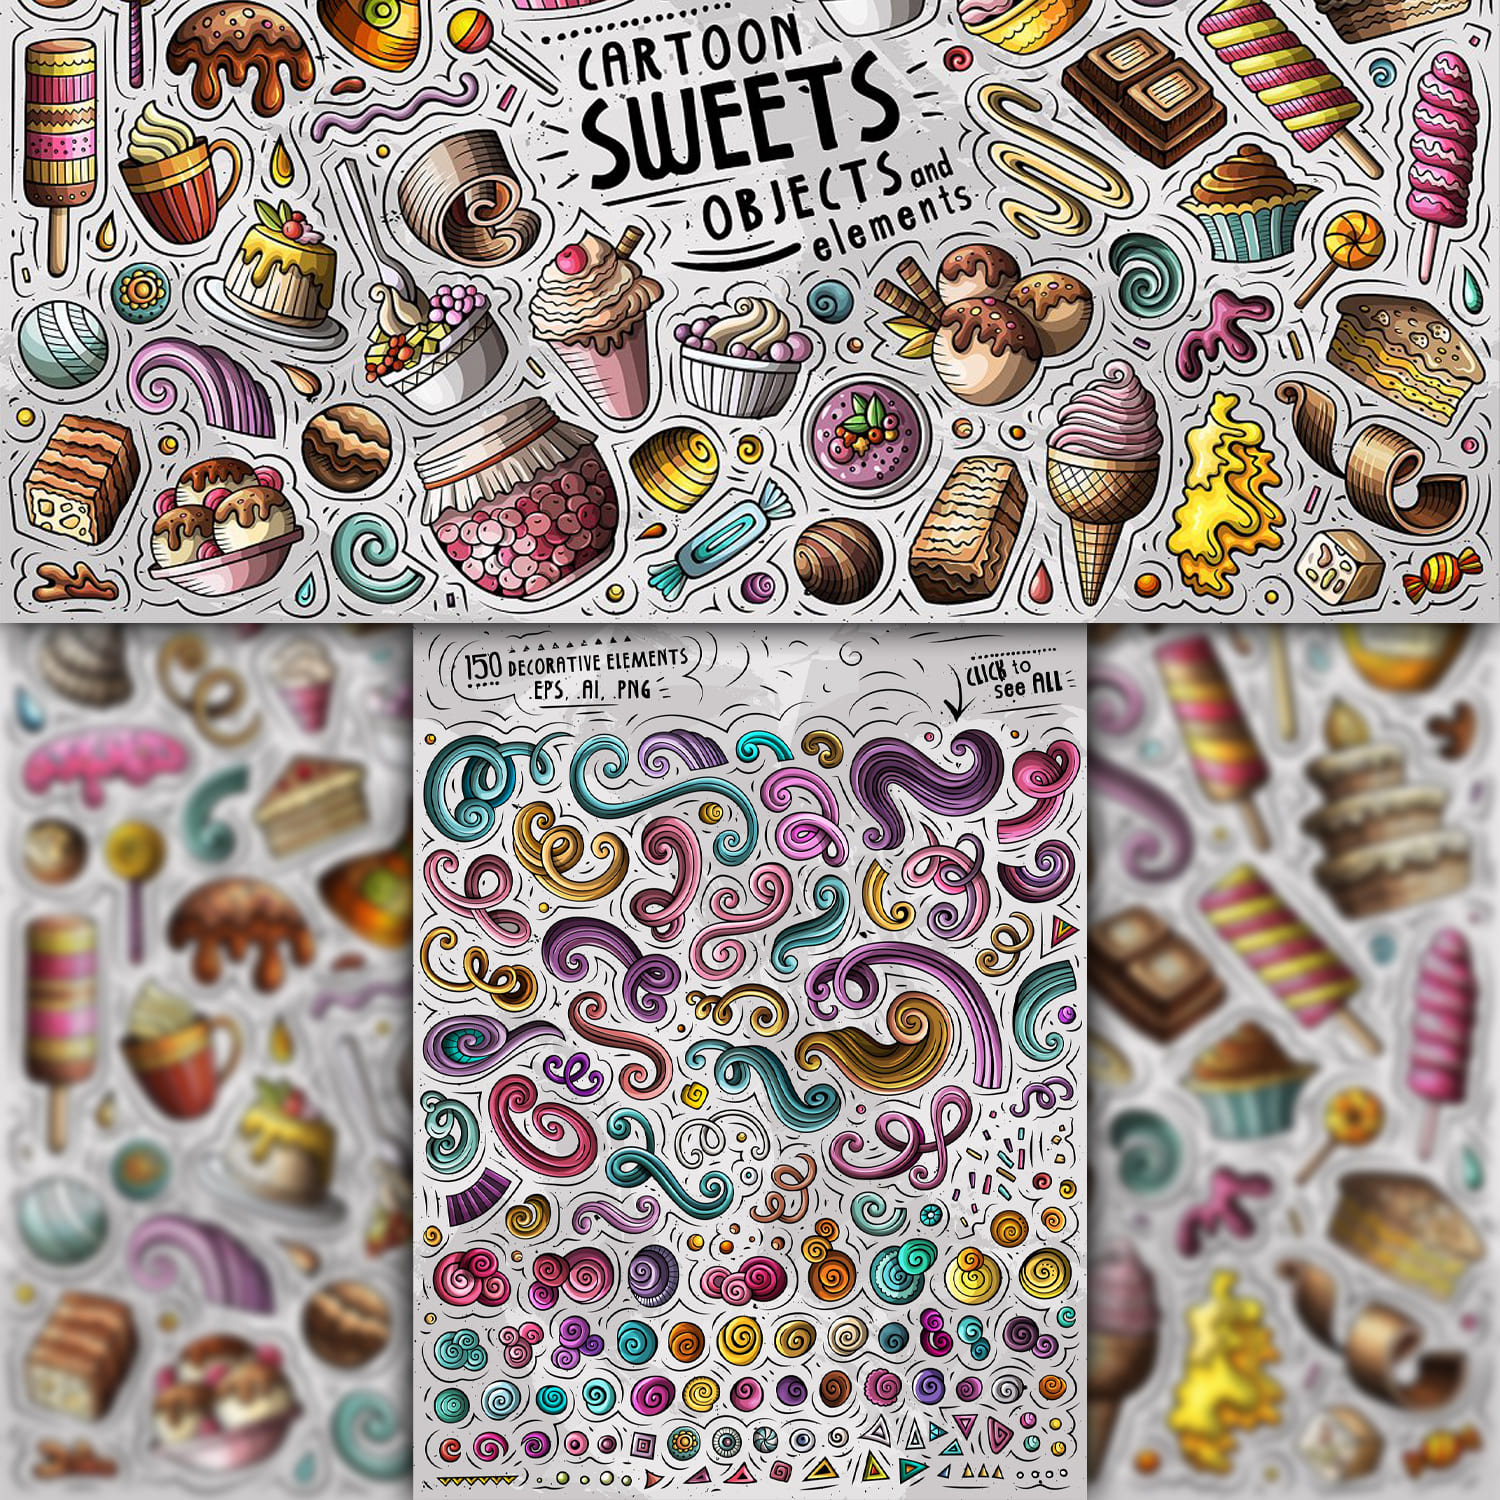 Sweet Food Cartoon Objects Set 1500 1500 2.